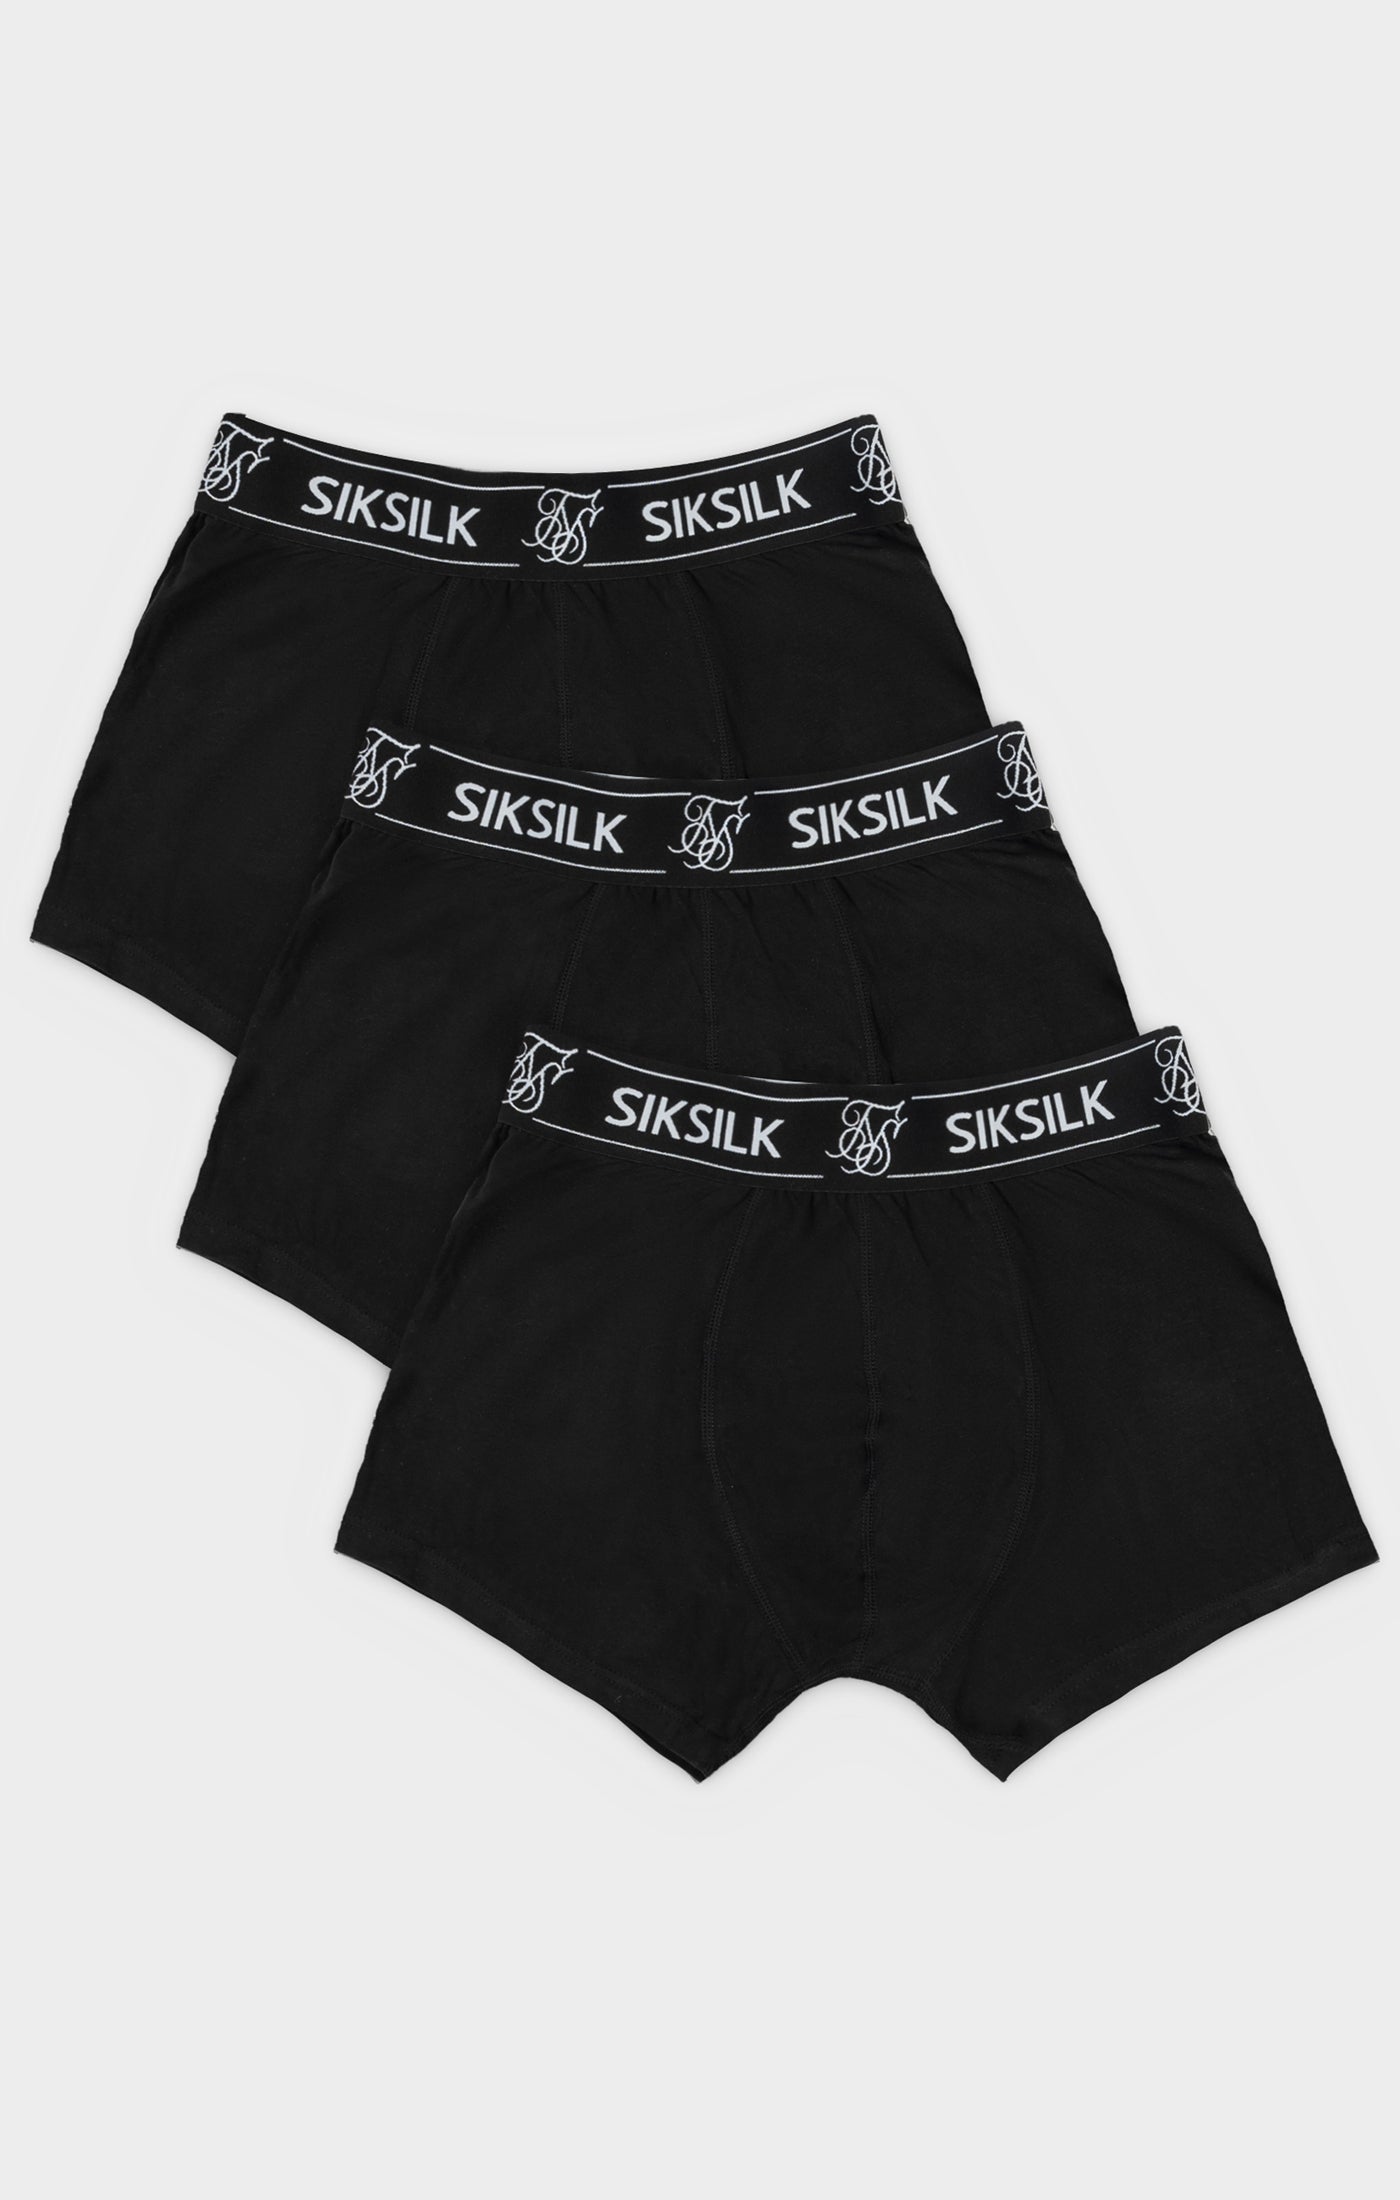 Siksilk - Black 3 Pack Boxer Short - Stayin